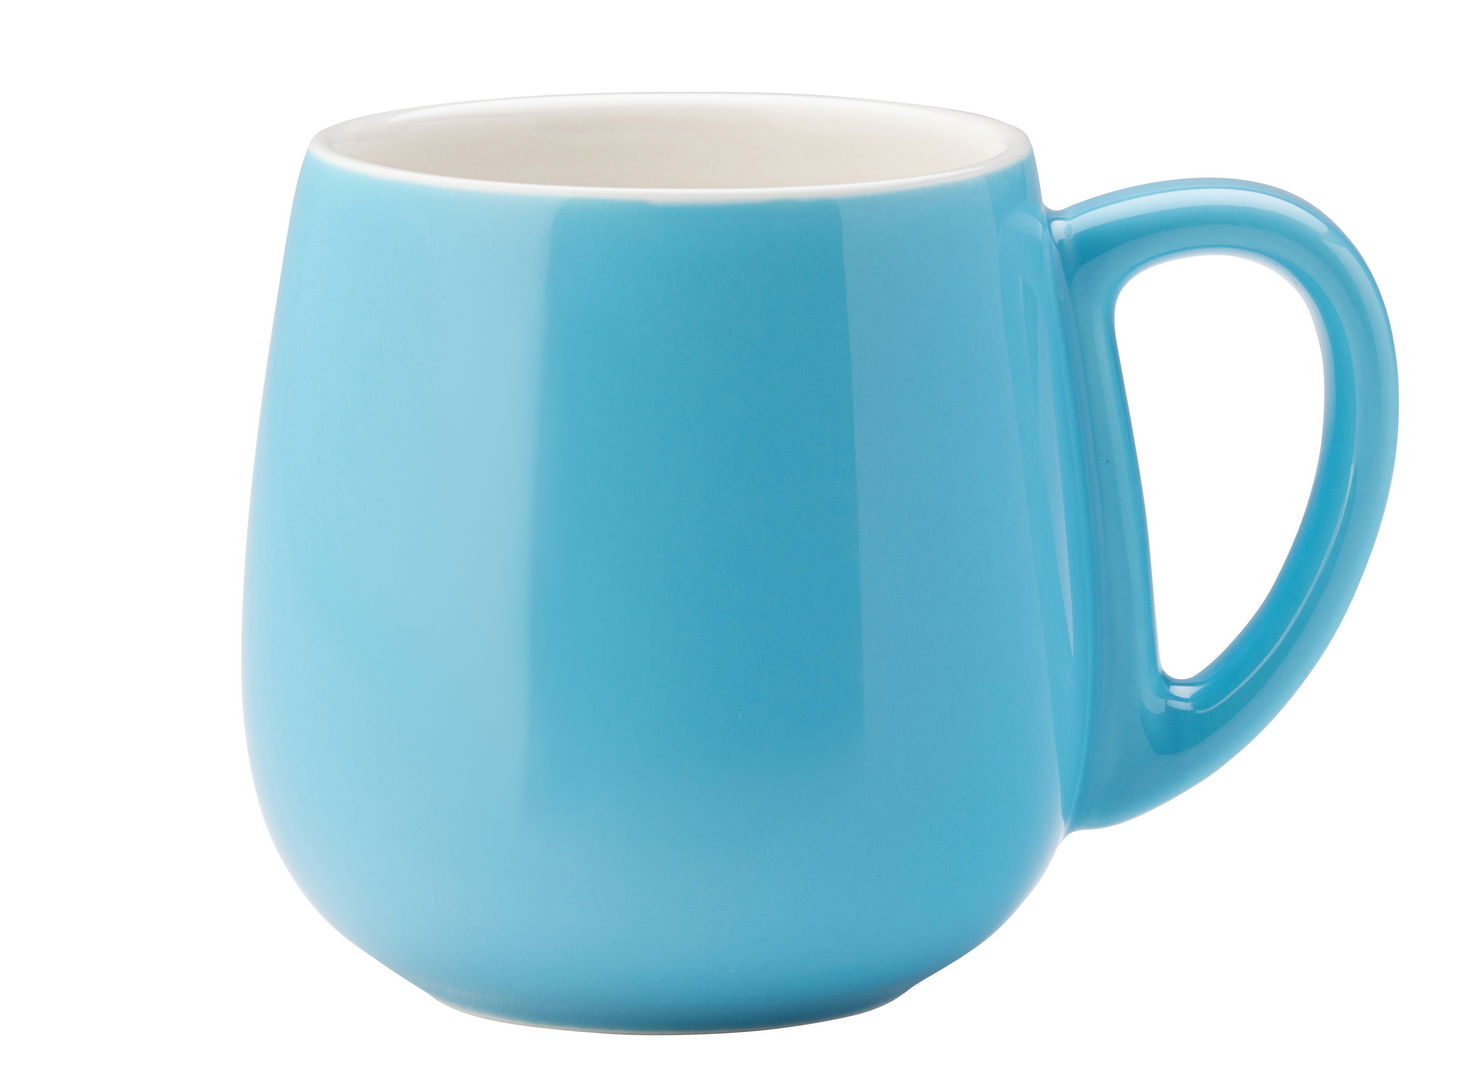 Barista Blue Mug 15oz (42cl) - CT9021-000000-B01006 (Pack of 6)